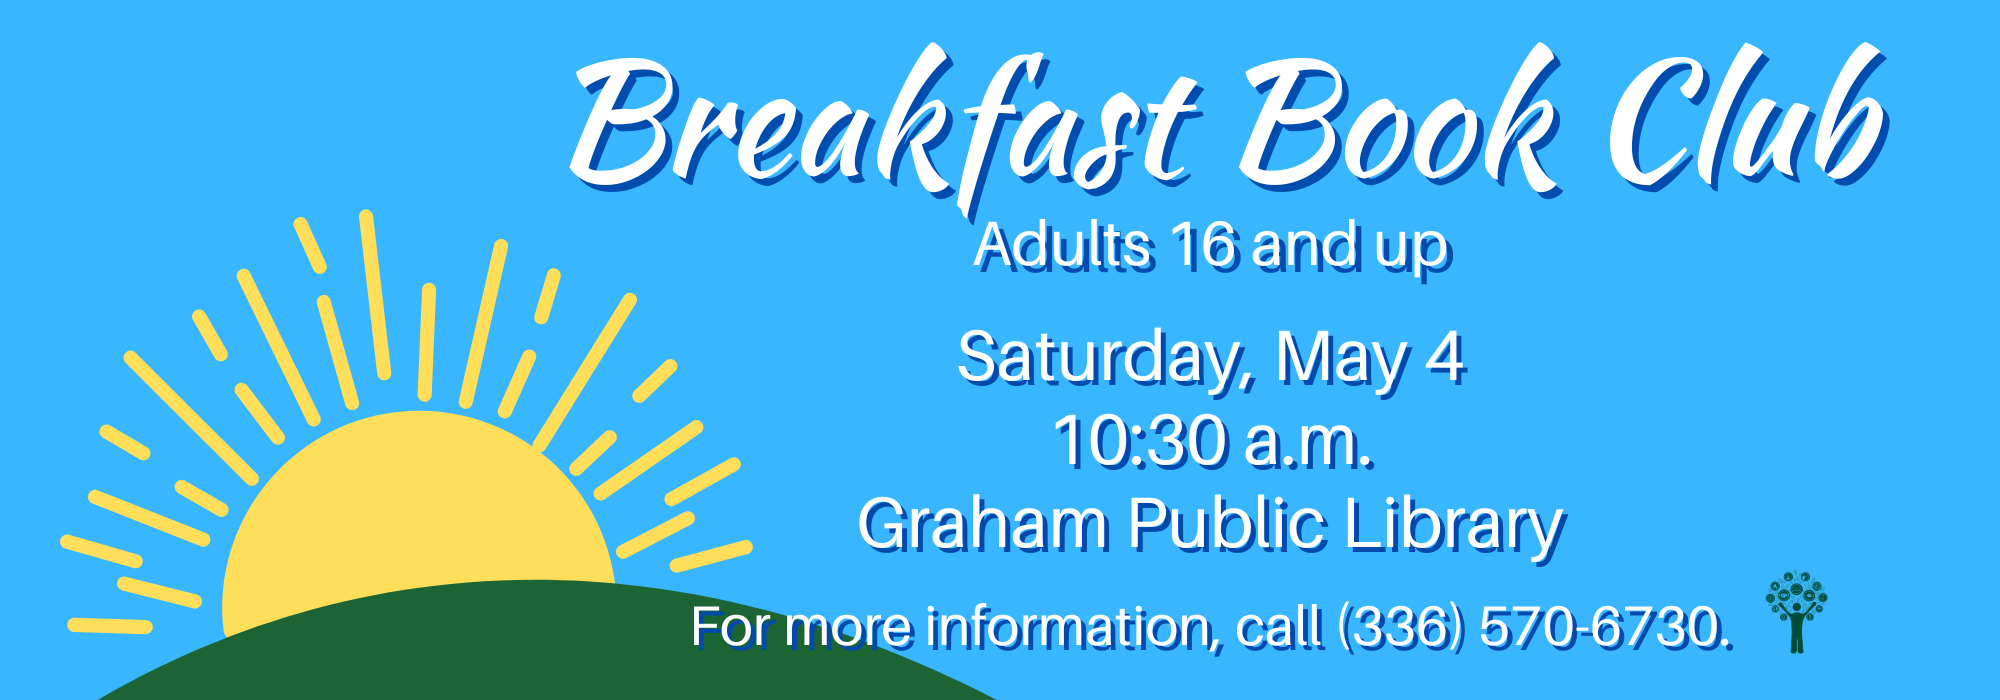 5.4 at 1030 am - Breakfast Book Club at Graham